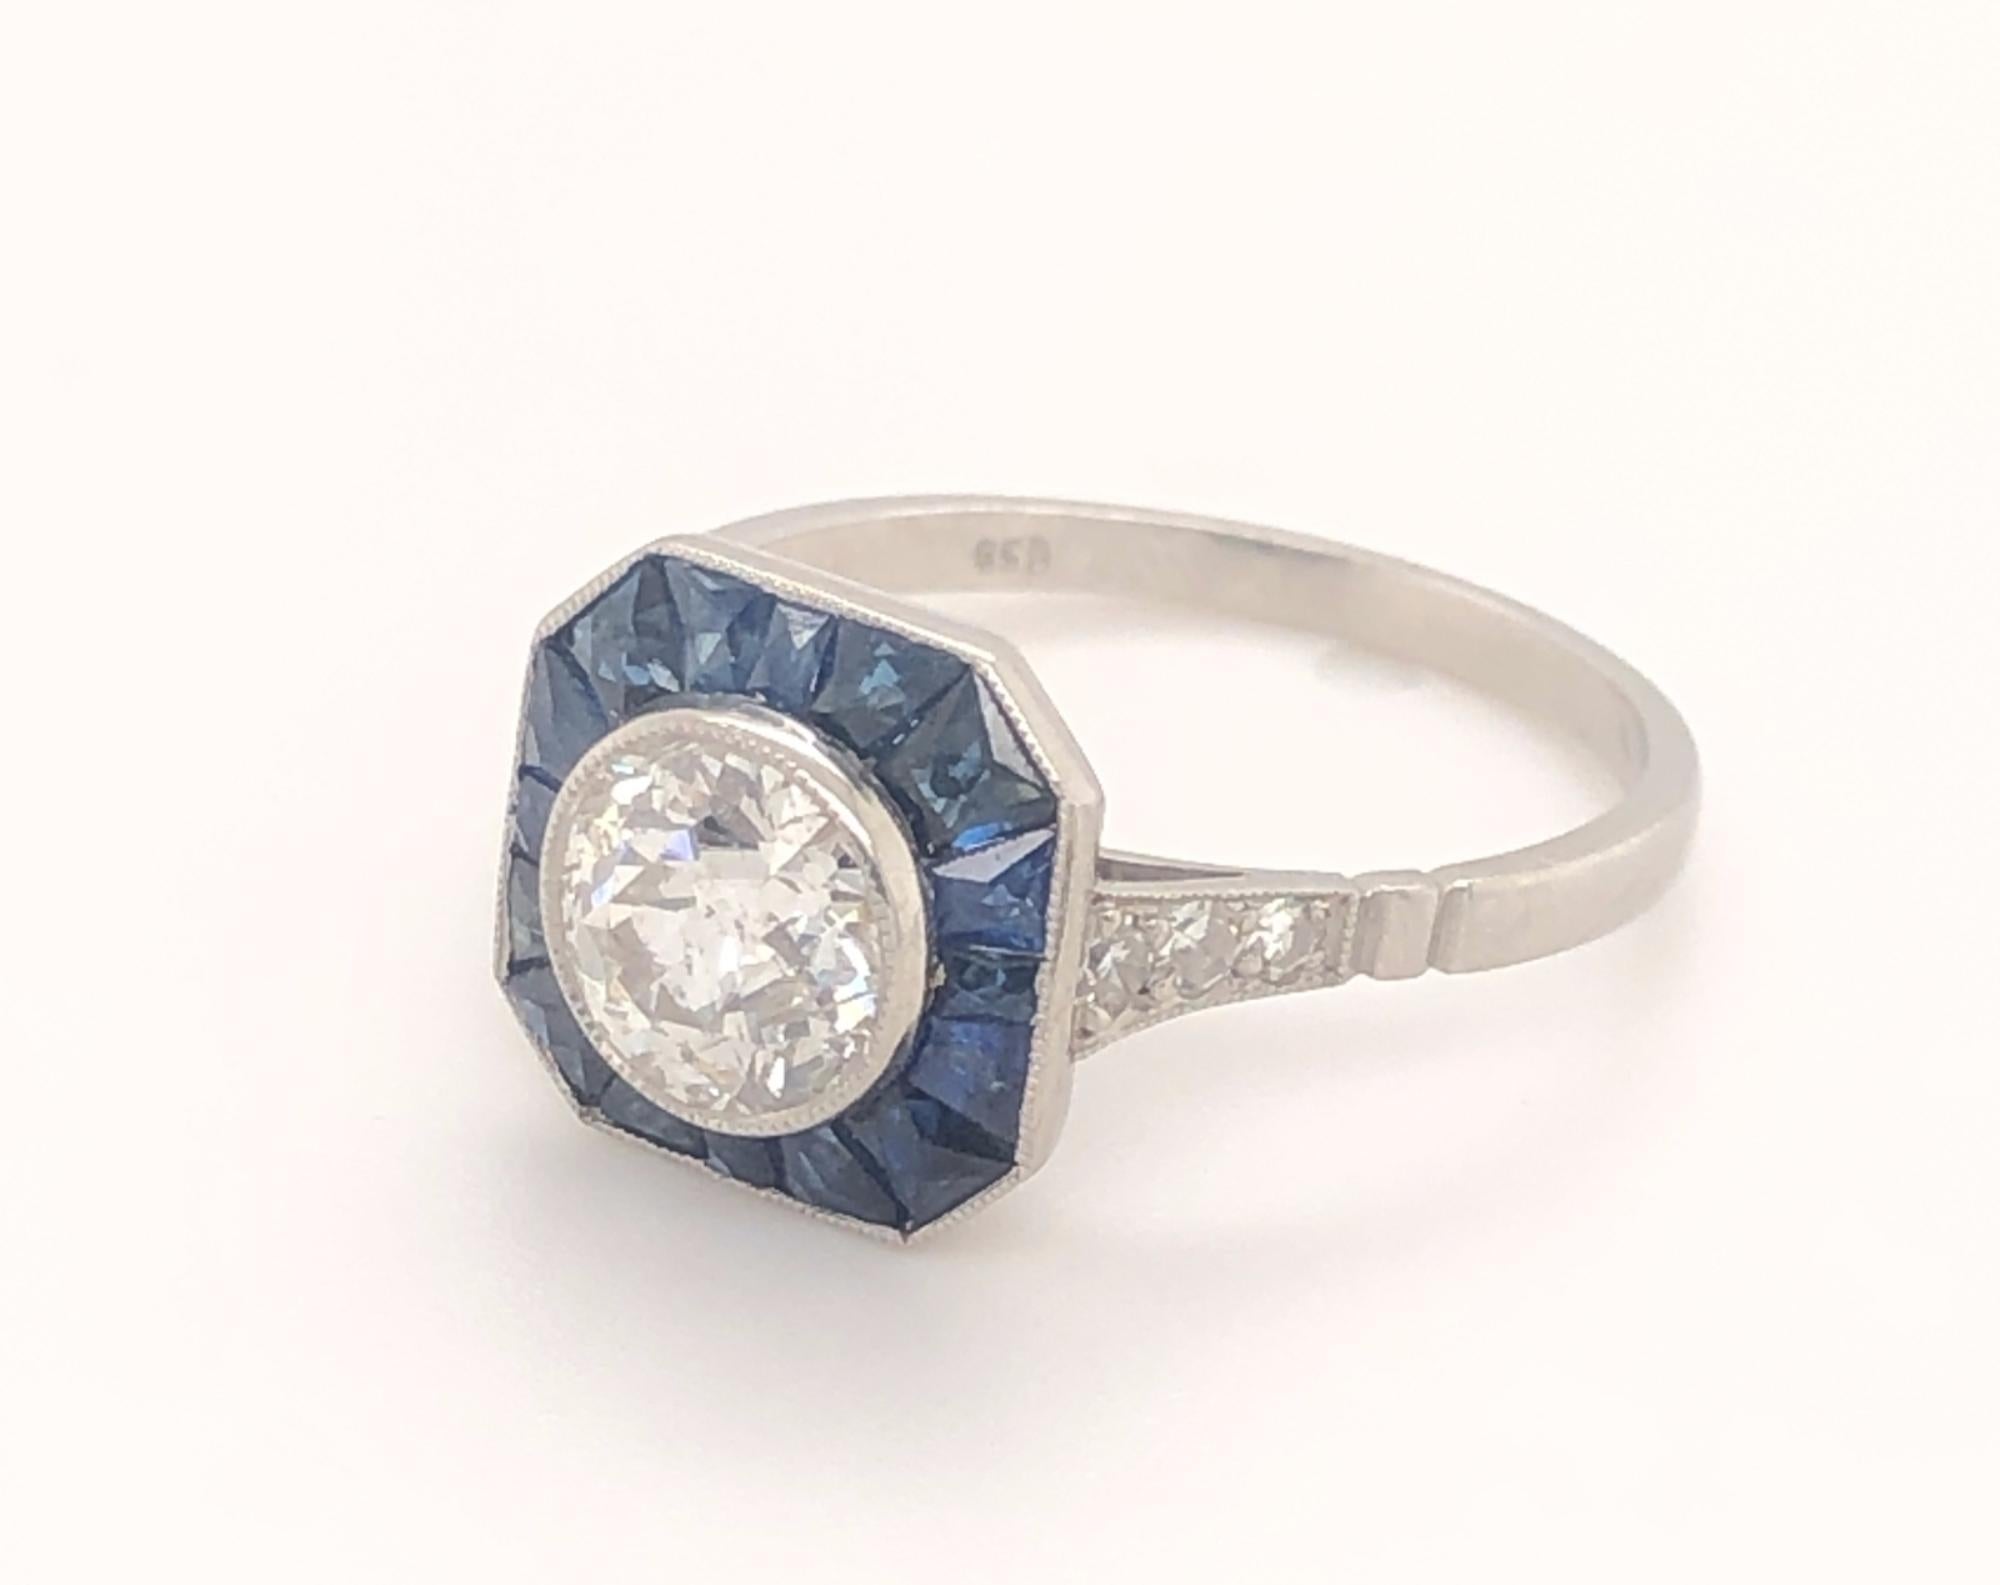 Art Deco Style 1.1 Euro Cut Diamond Sapphires Platinum Engagement Ring. This is a stunning art deco style engagement ring set with 1.18 round European cut diamond with a halo of natural sapphires set in platinum. Each shoulder has three round